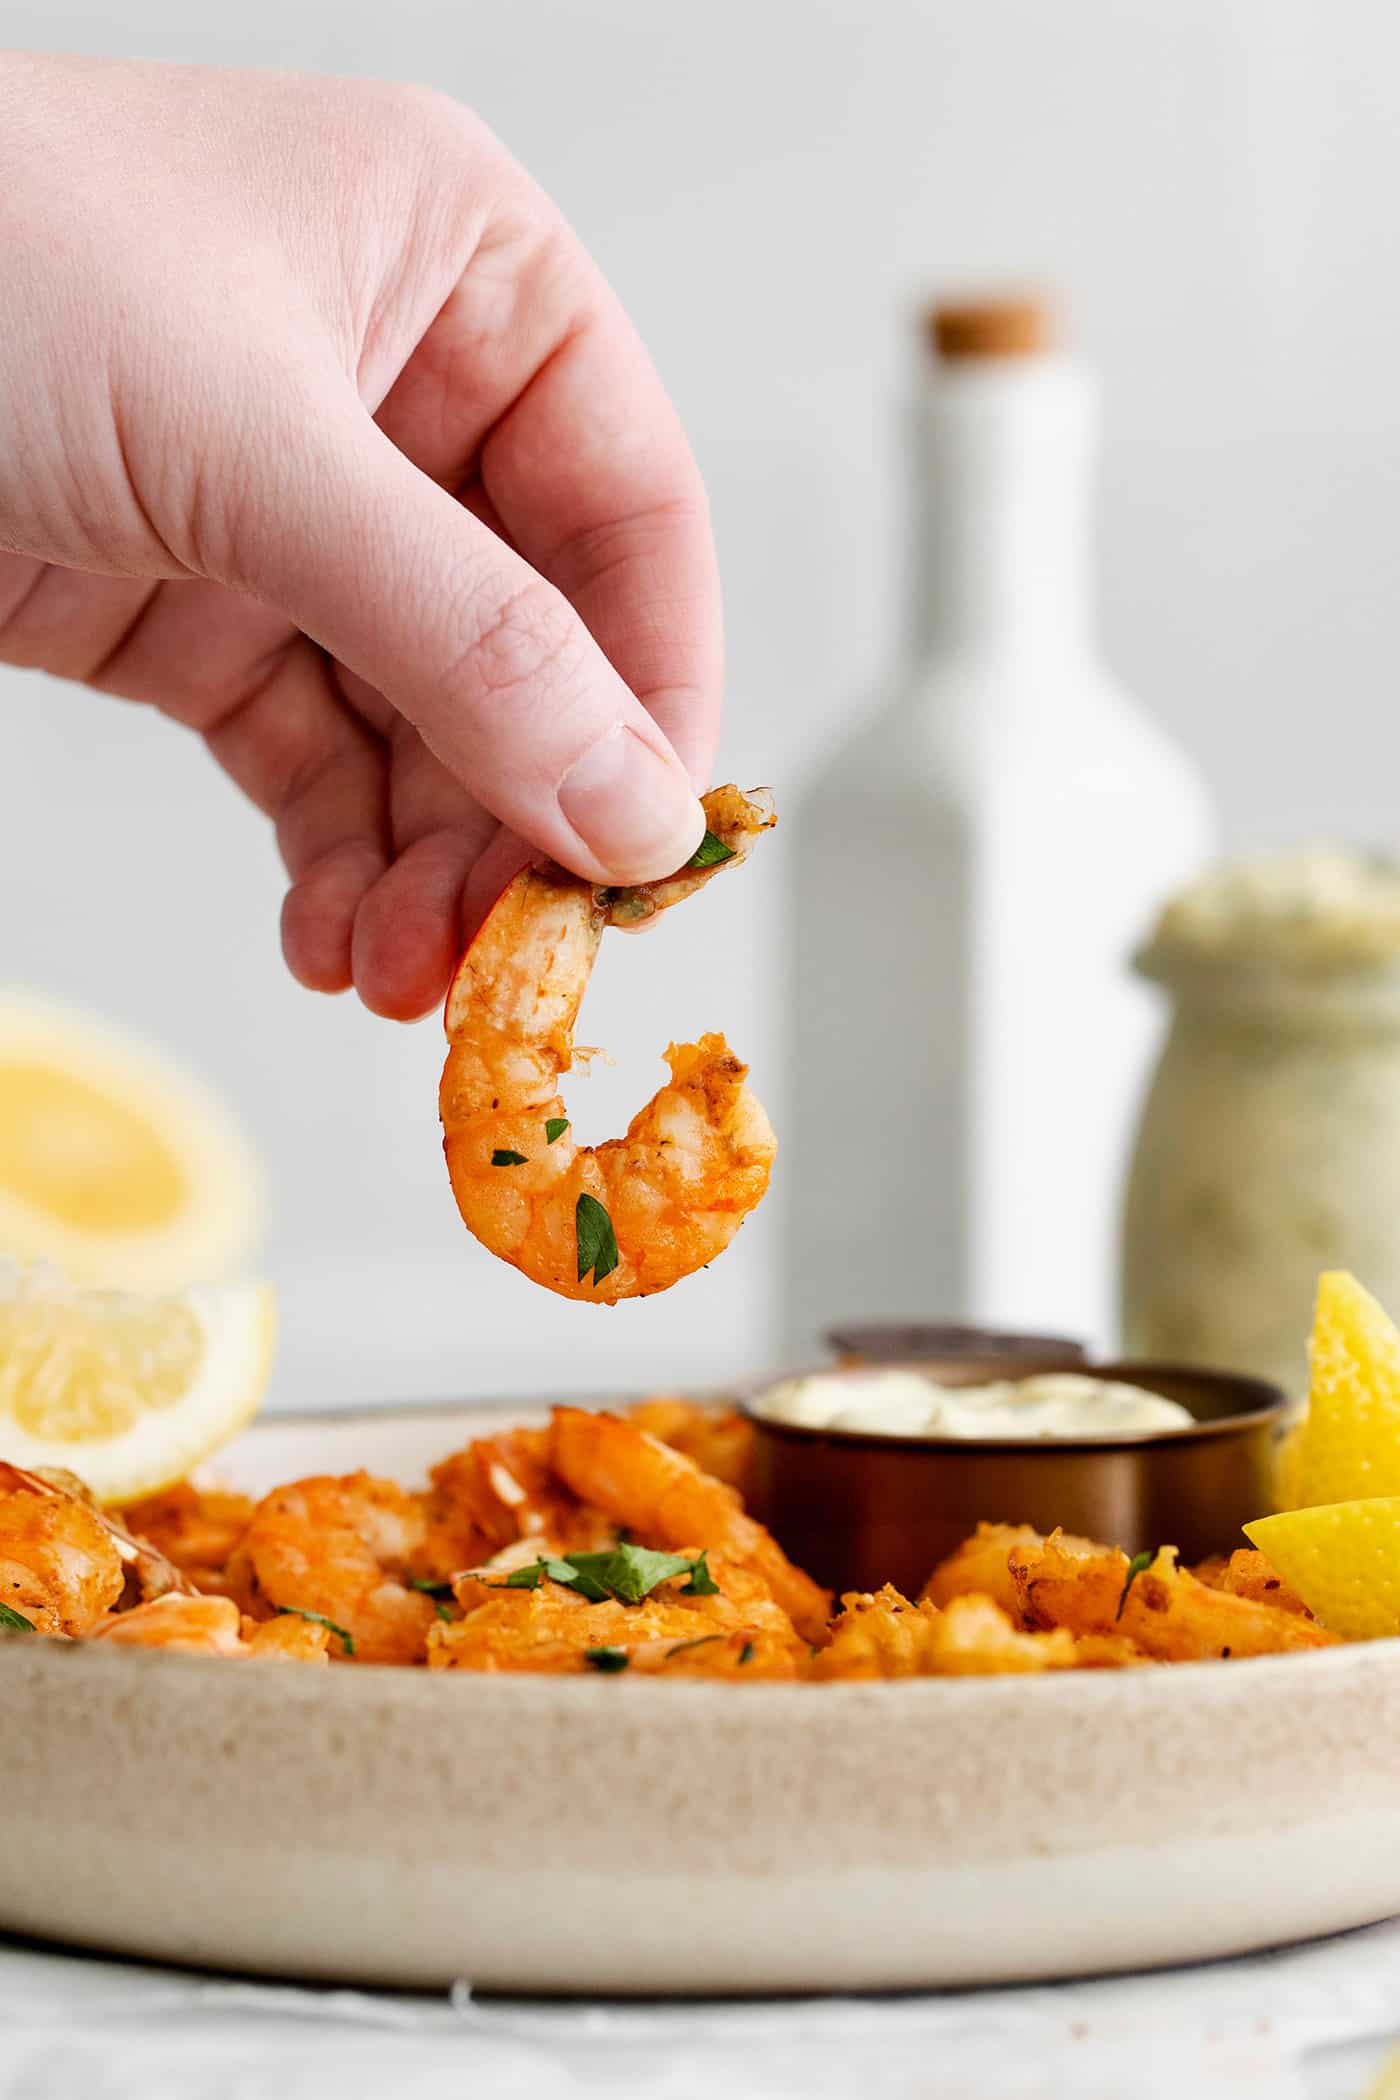 A hand holding seasoned shrimp over tartar sauce.